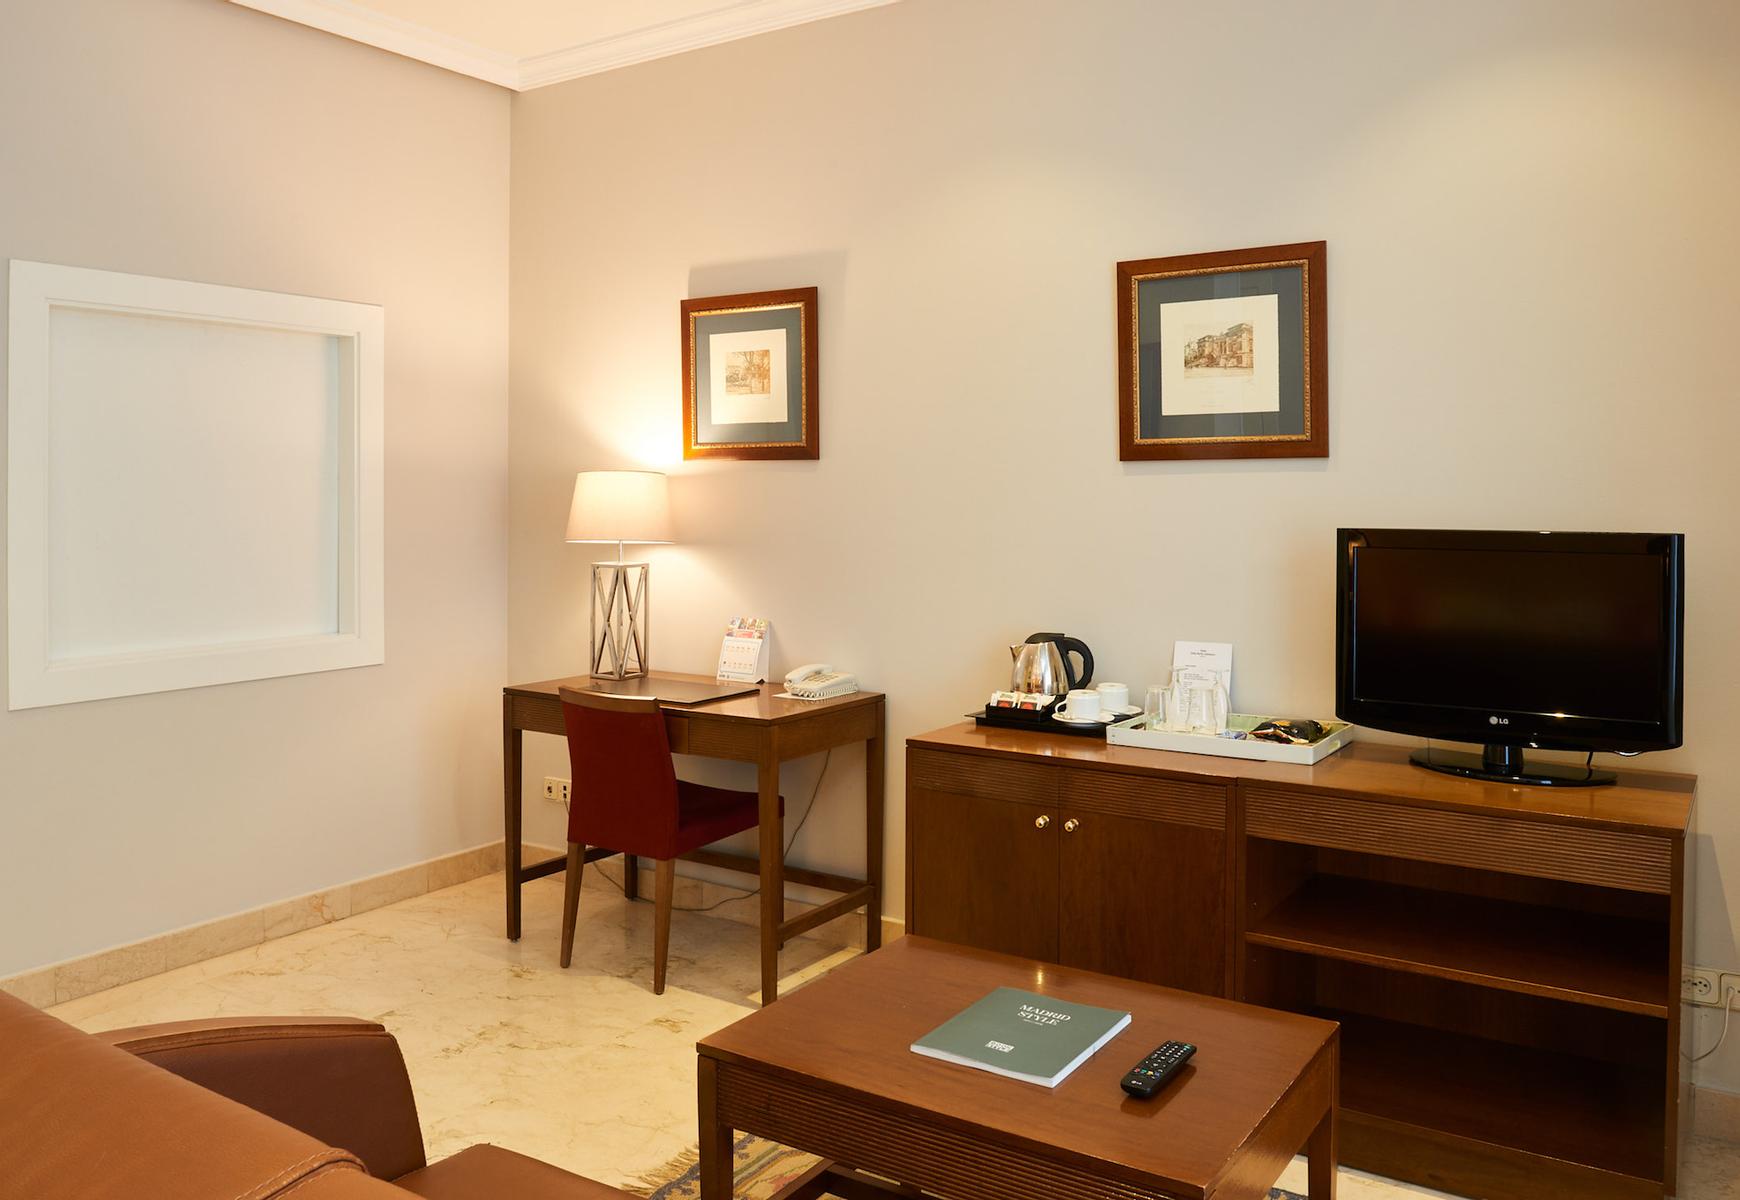 Hotel Suites Barrio de Salamanca | Madrid | Accommodation 02 - 